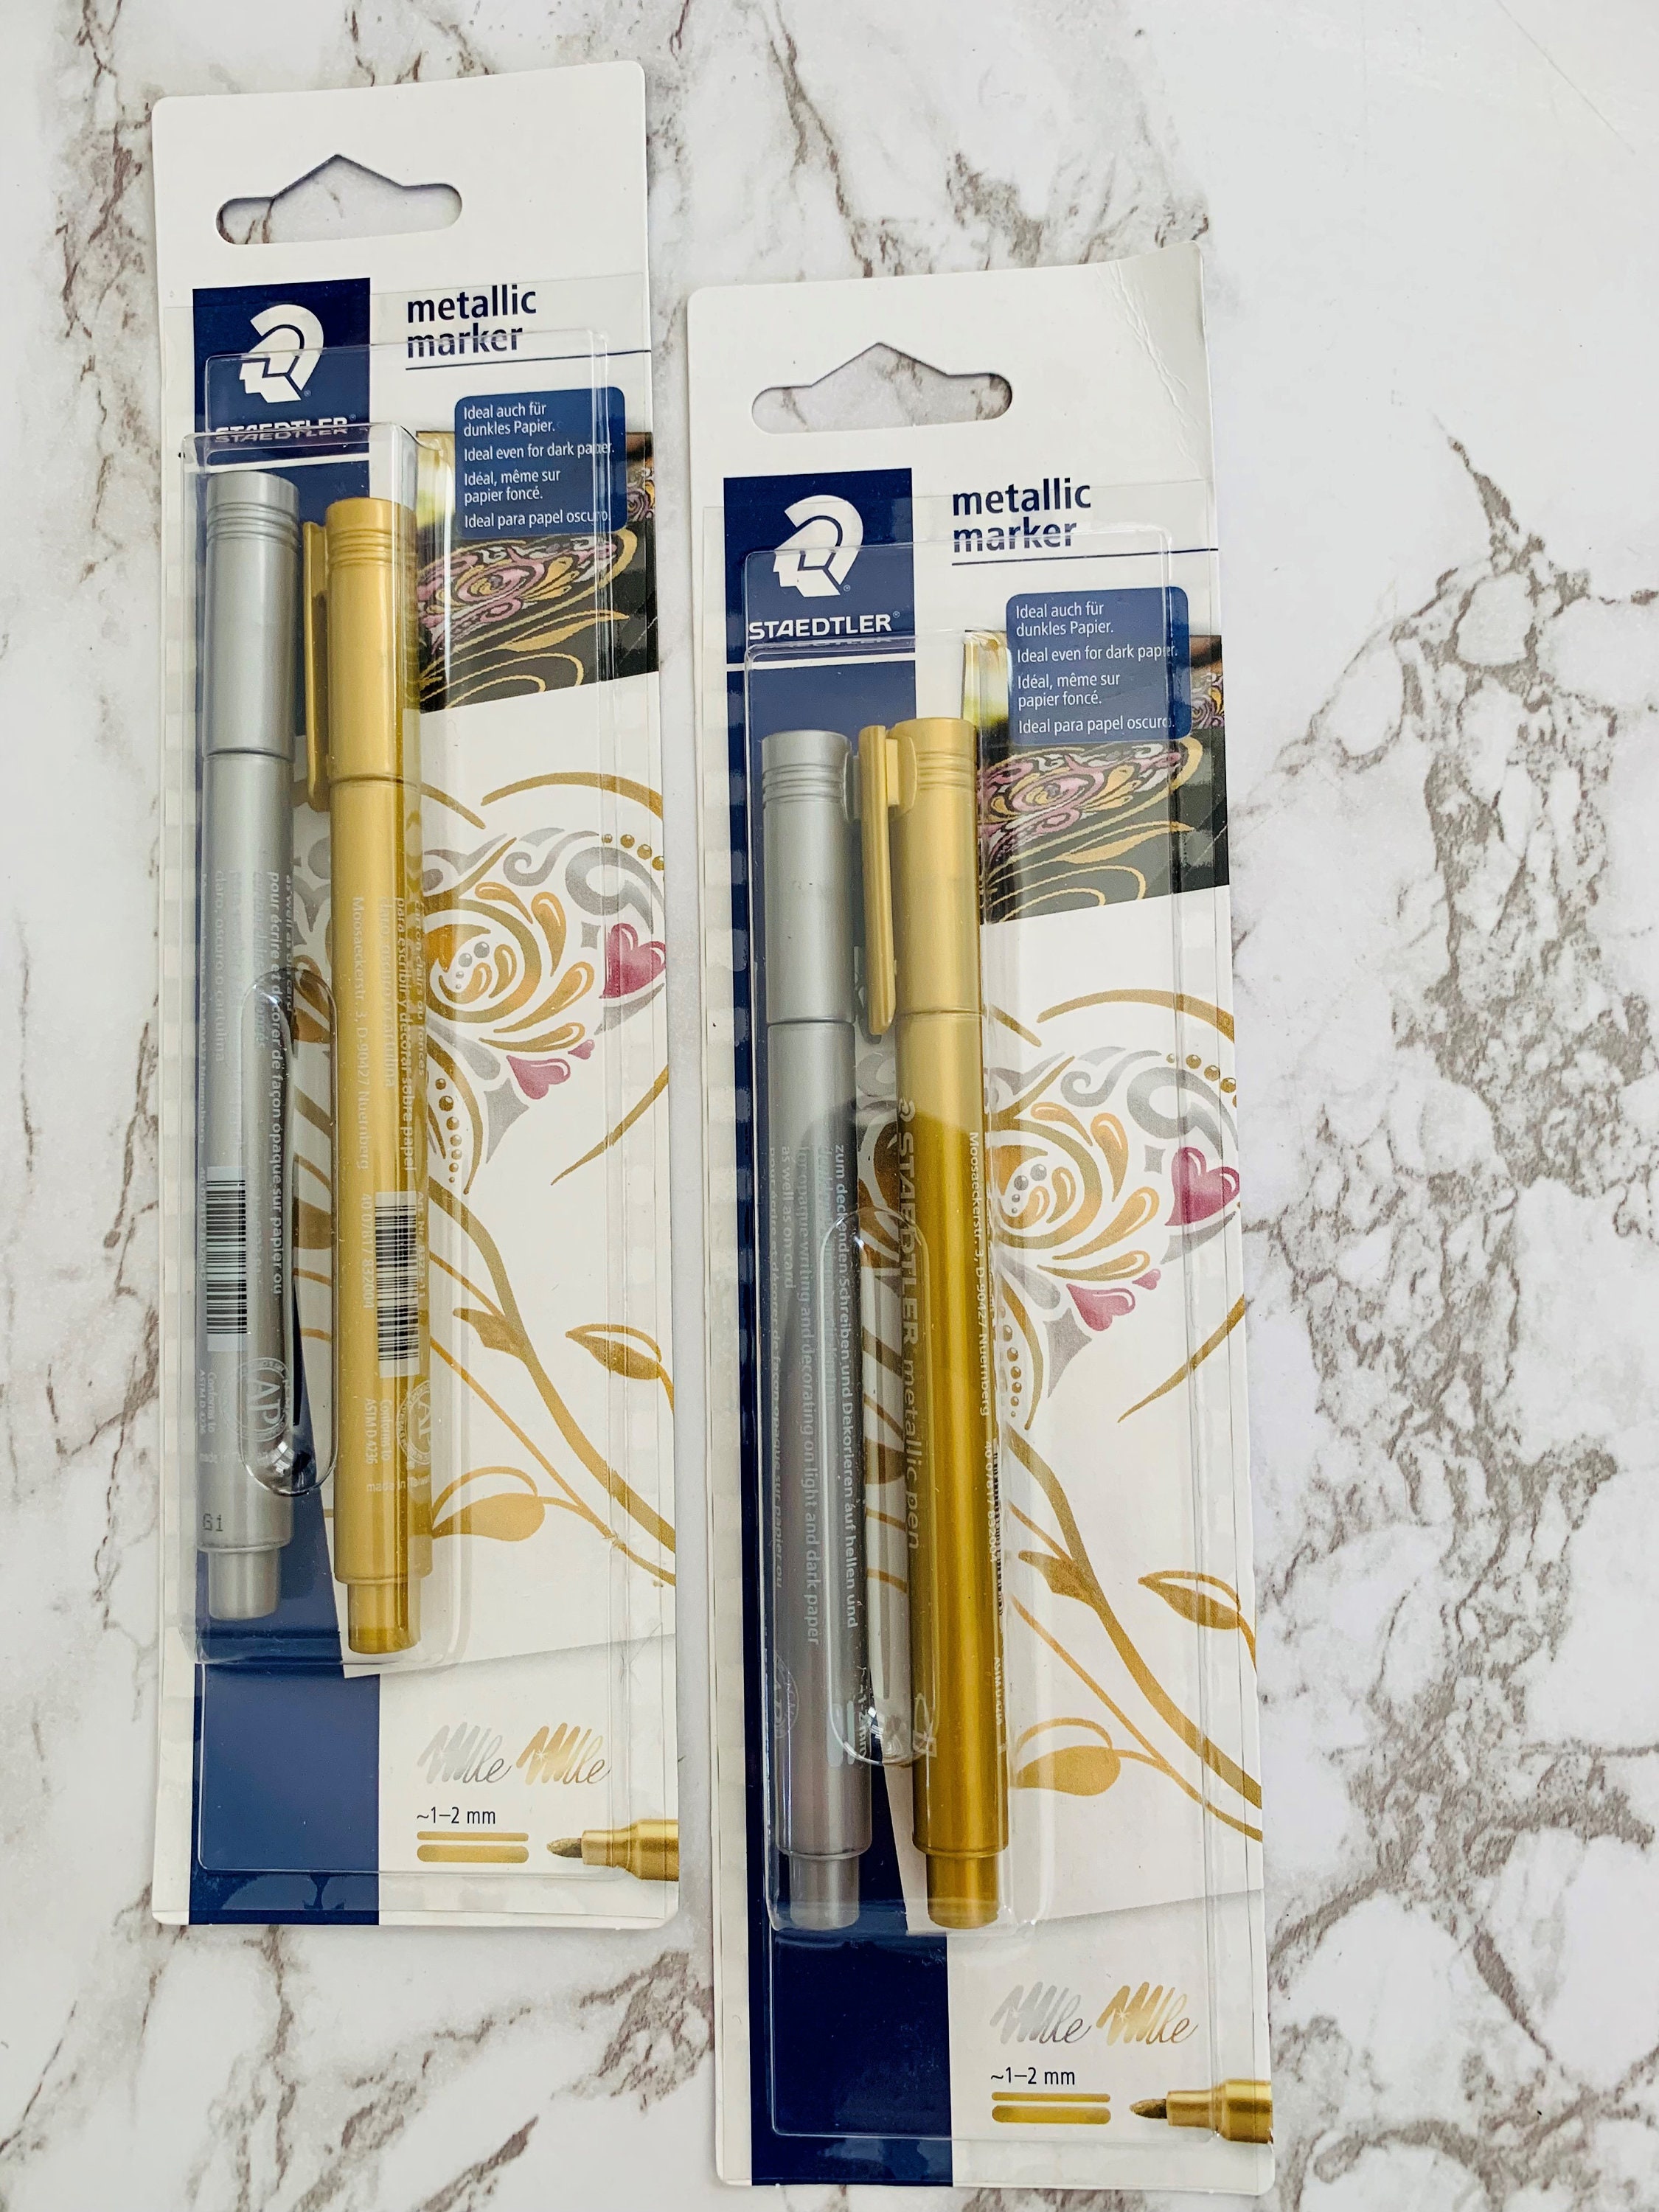 STA Pigment Fine Liner Pen Graphic & Brush Pen Black Fineliner Marker 